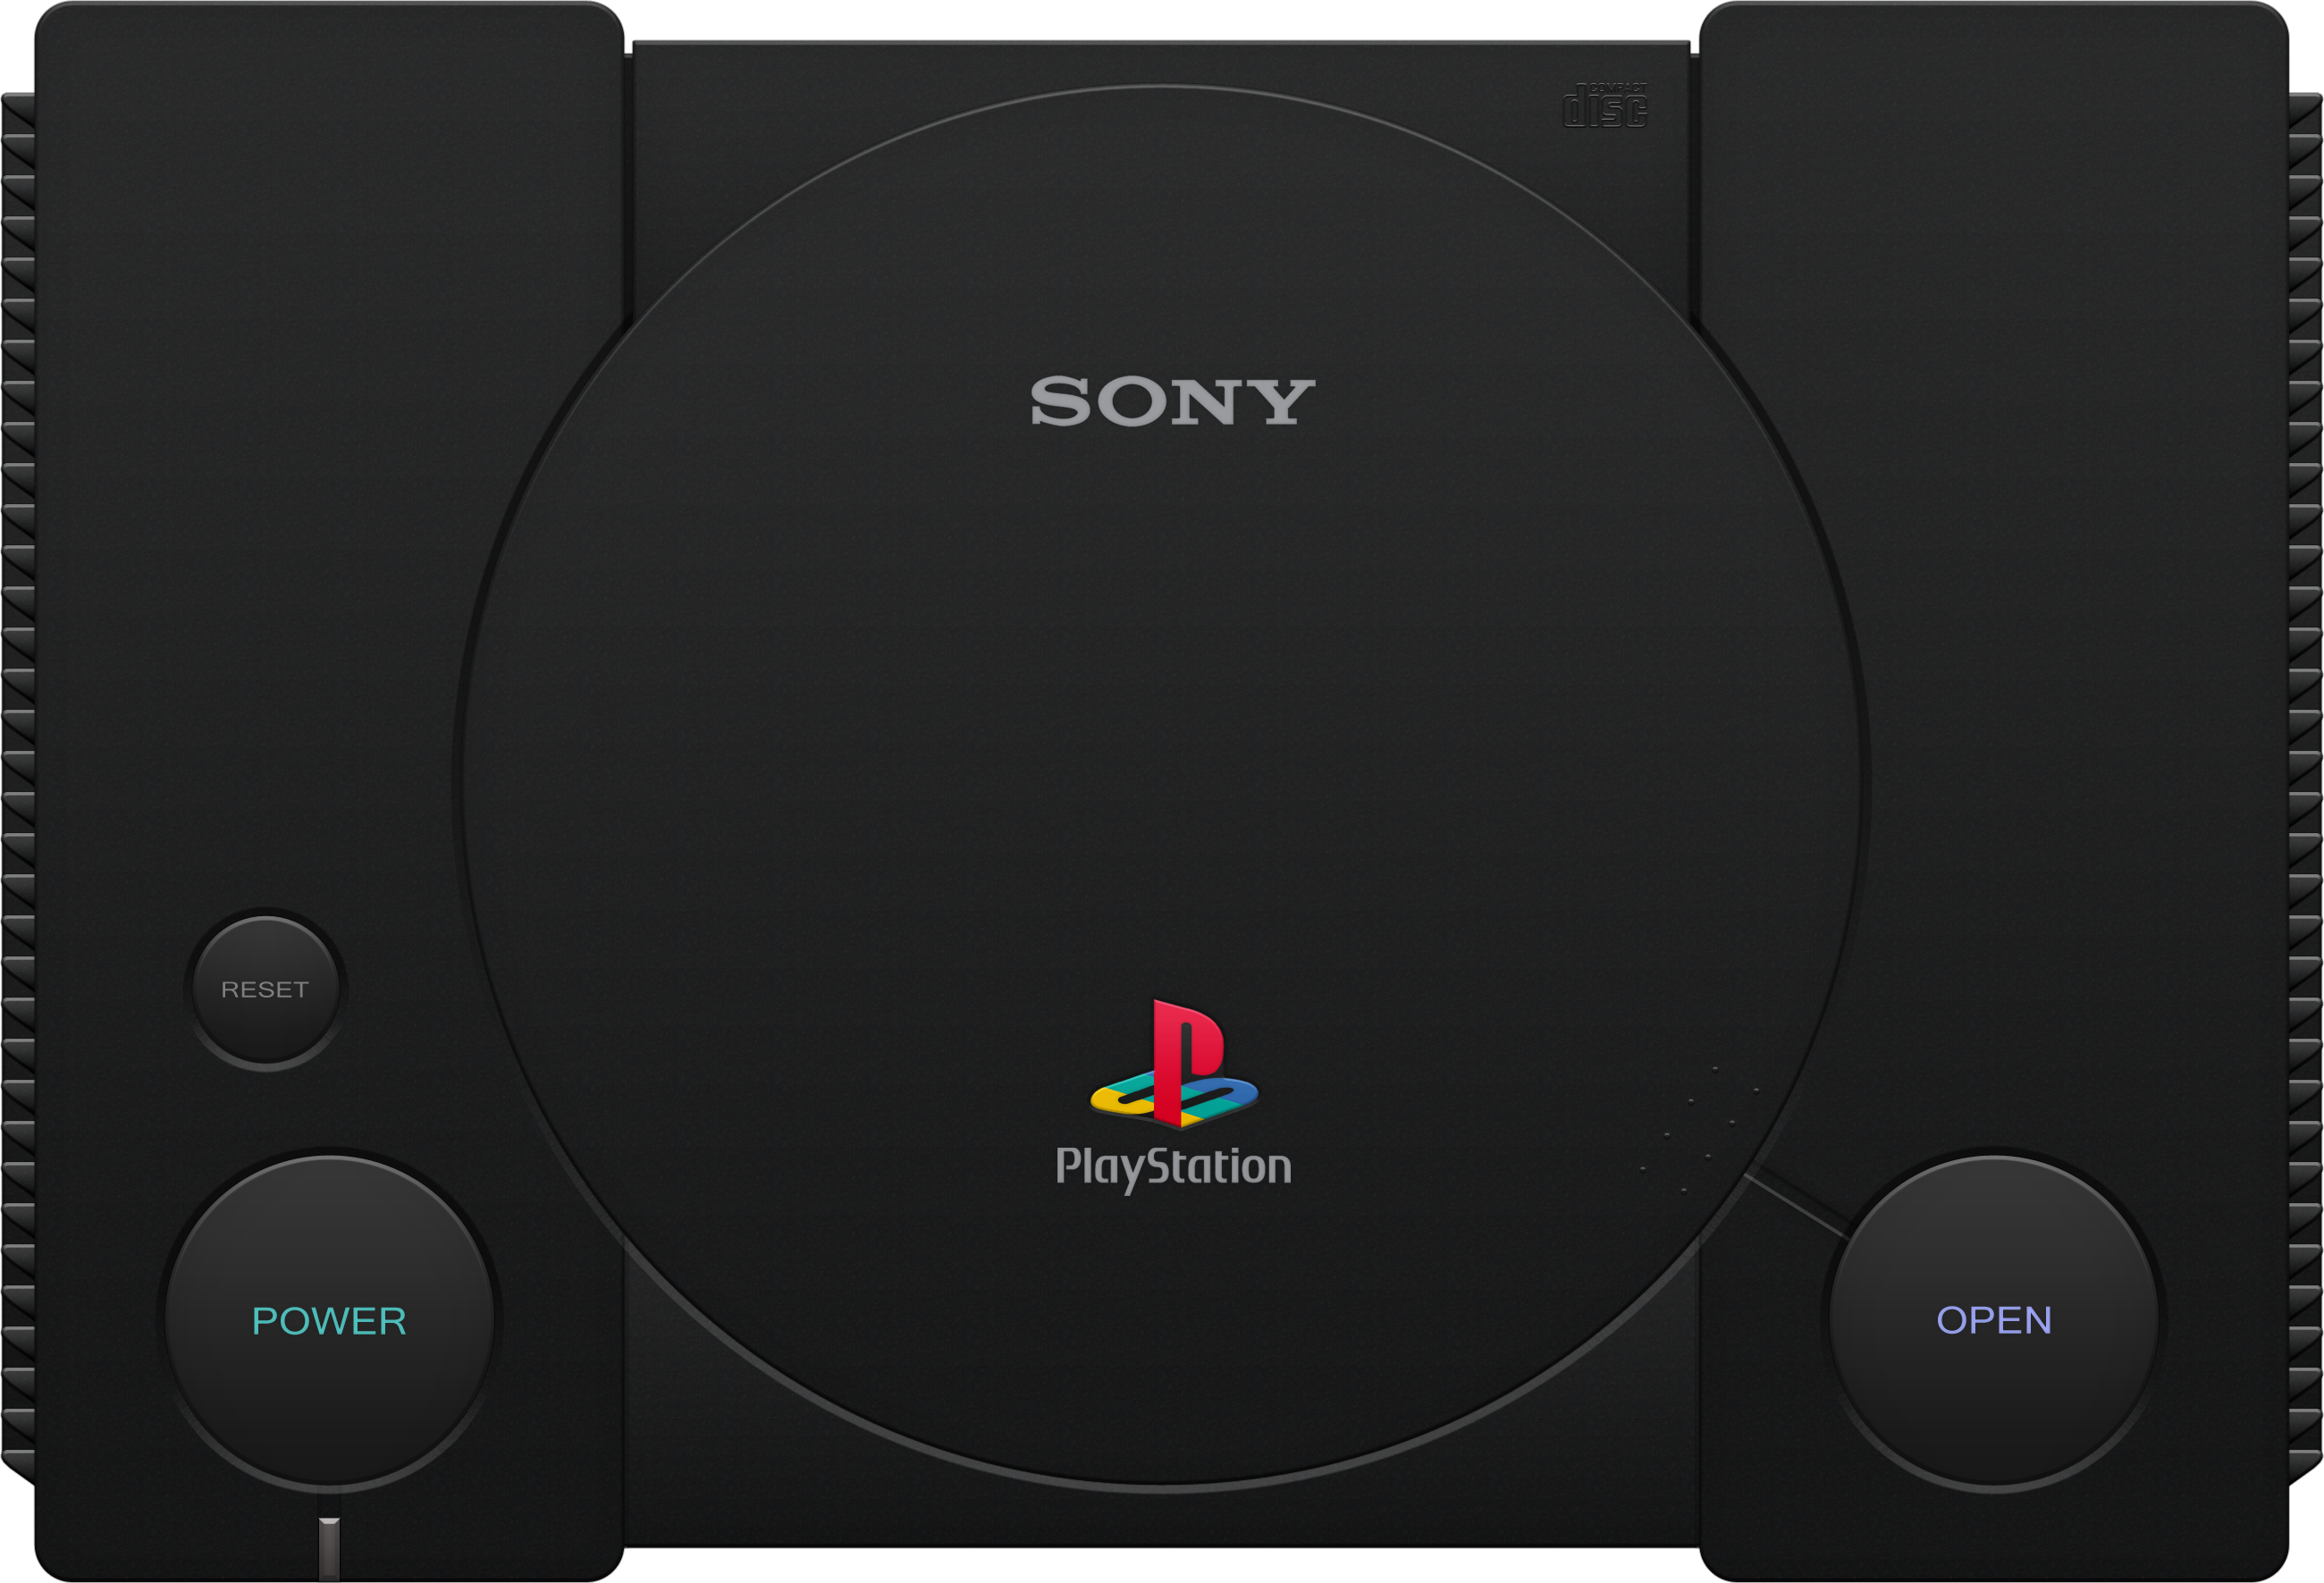 Sony PlayStation 2 Memory Card by BLUEamnesiac on DeviantArt